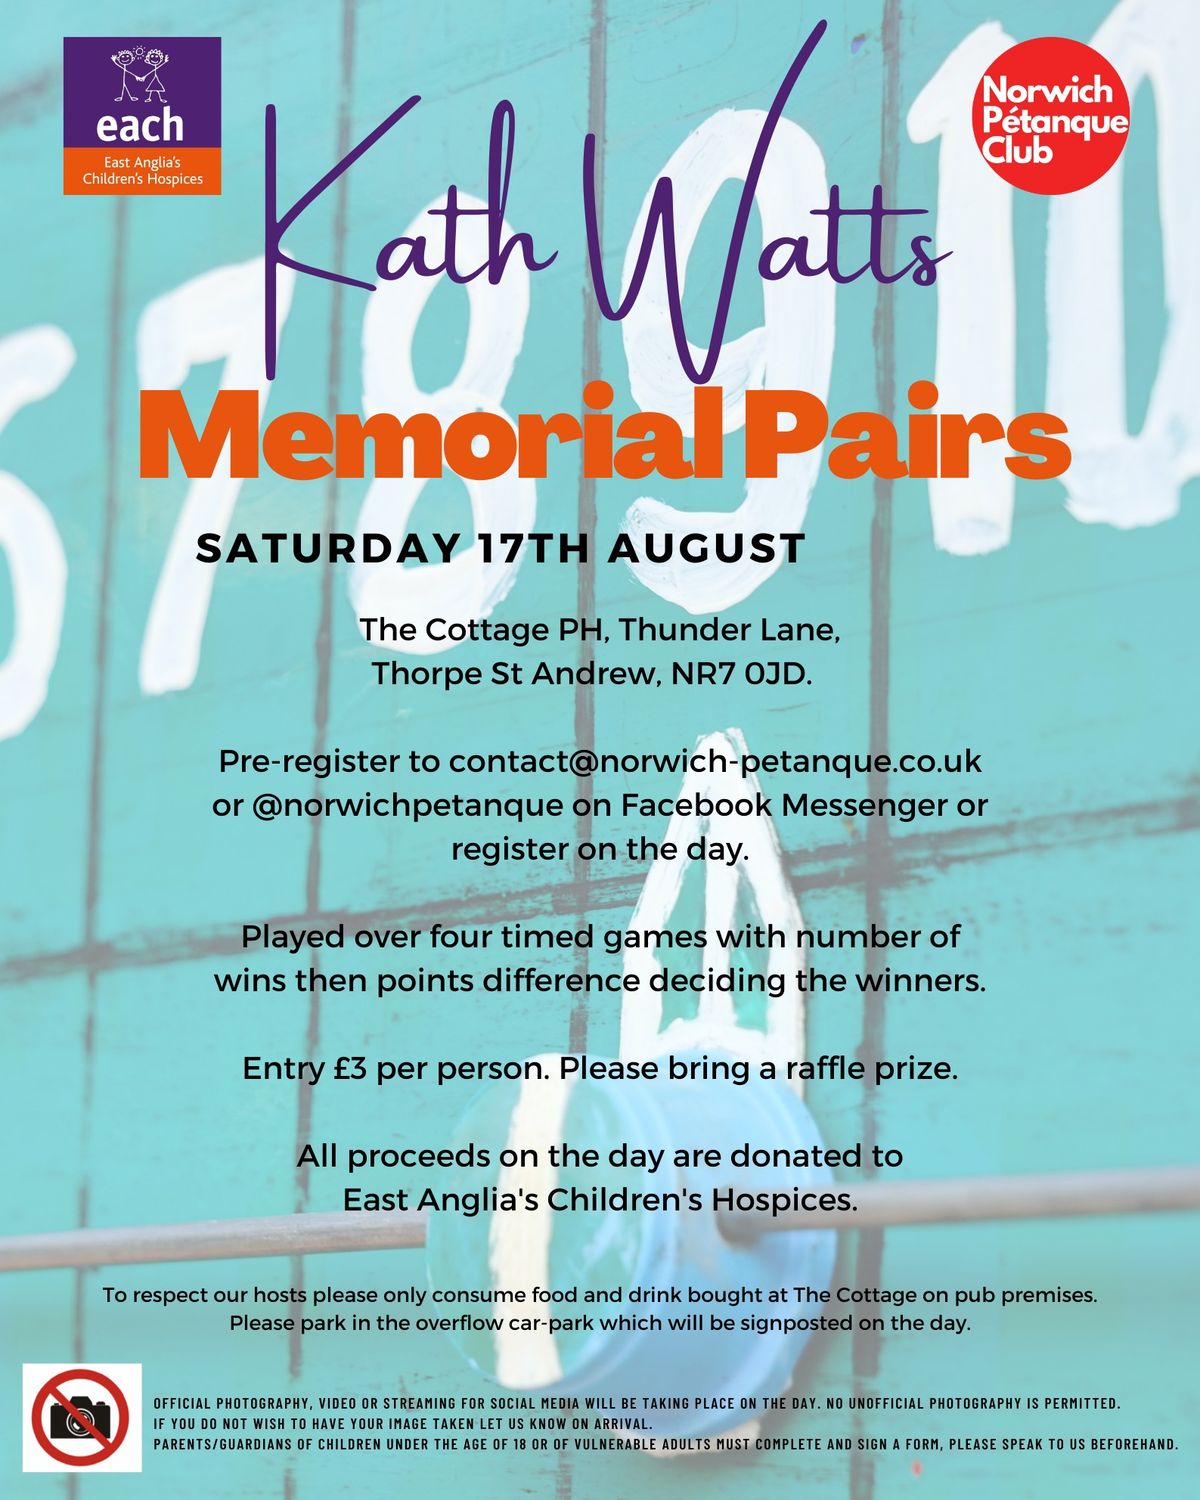 Kath Watts Memorial Pairs